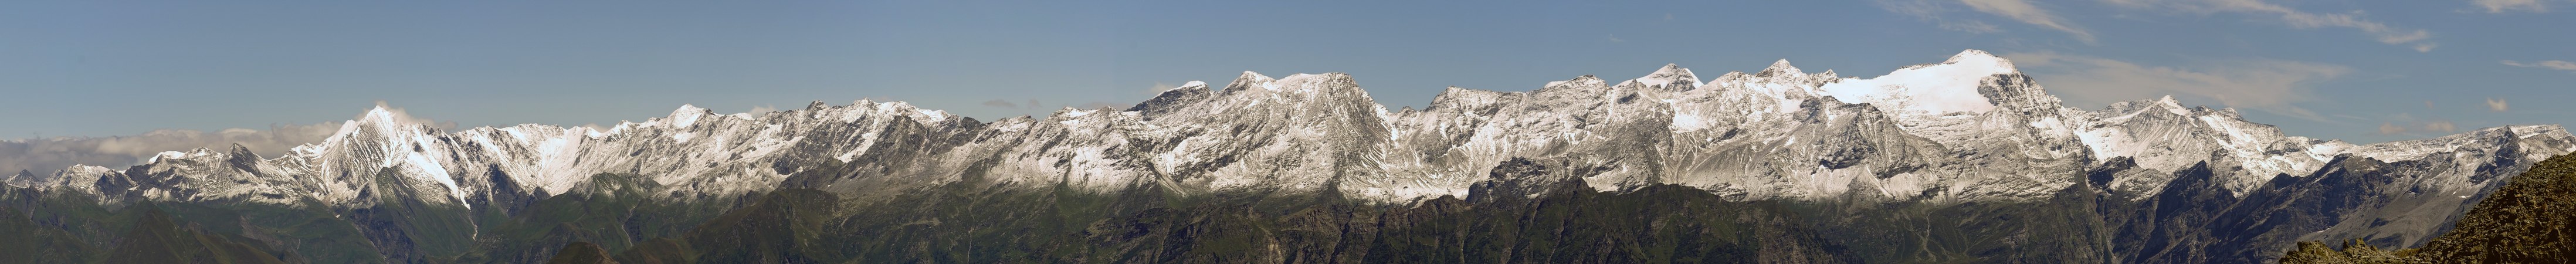 Val di Blenio side with mountain Adula, from Piz Terri